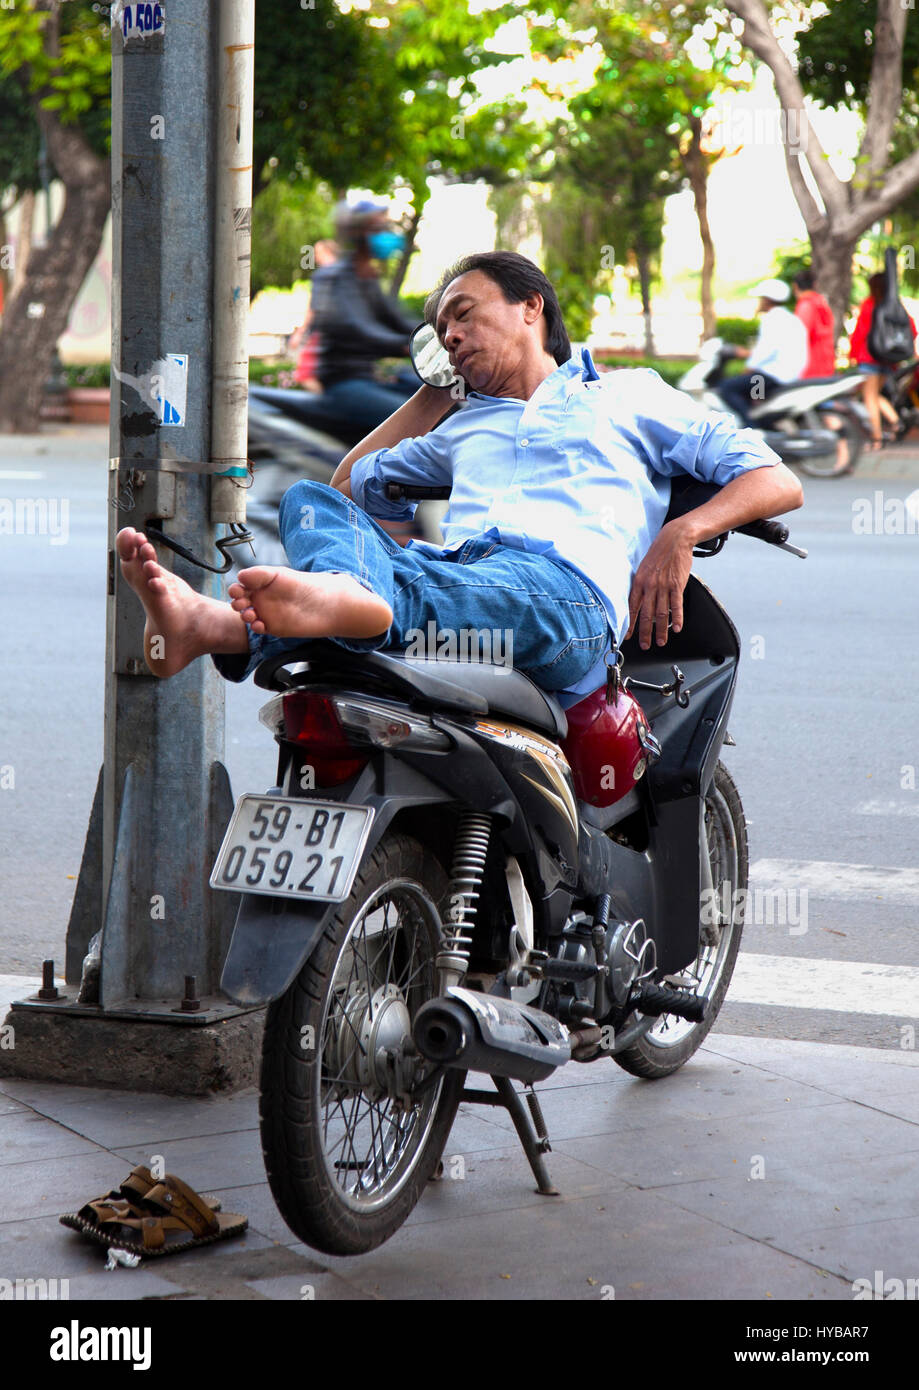 Some people can sleep anywhere even on a motor bike in Saigon Stock Photo